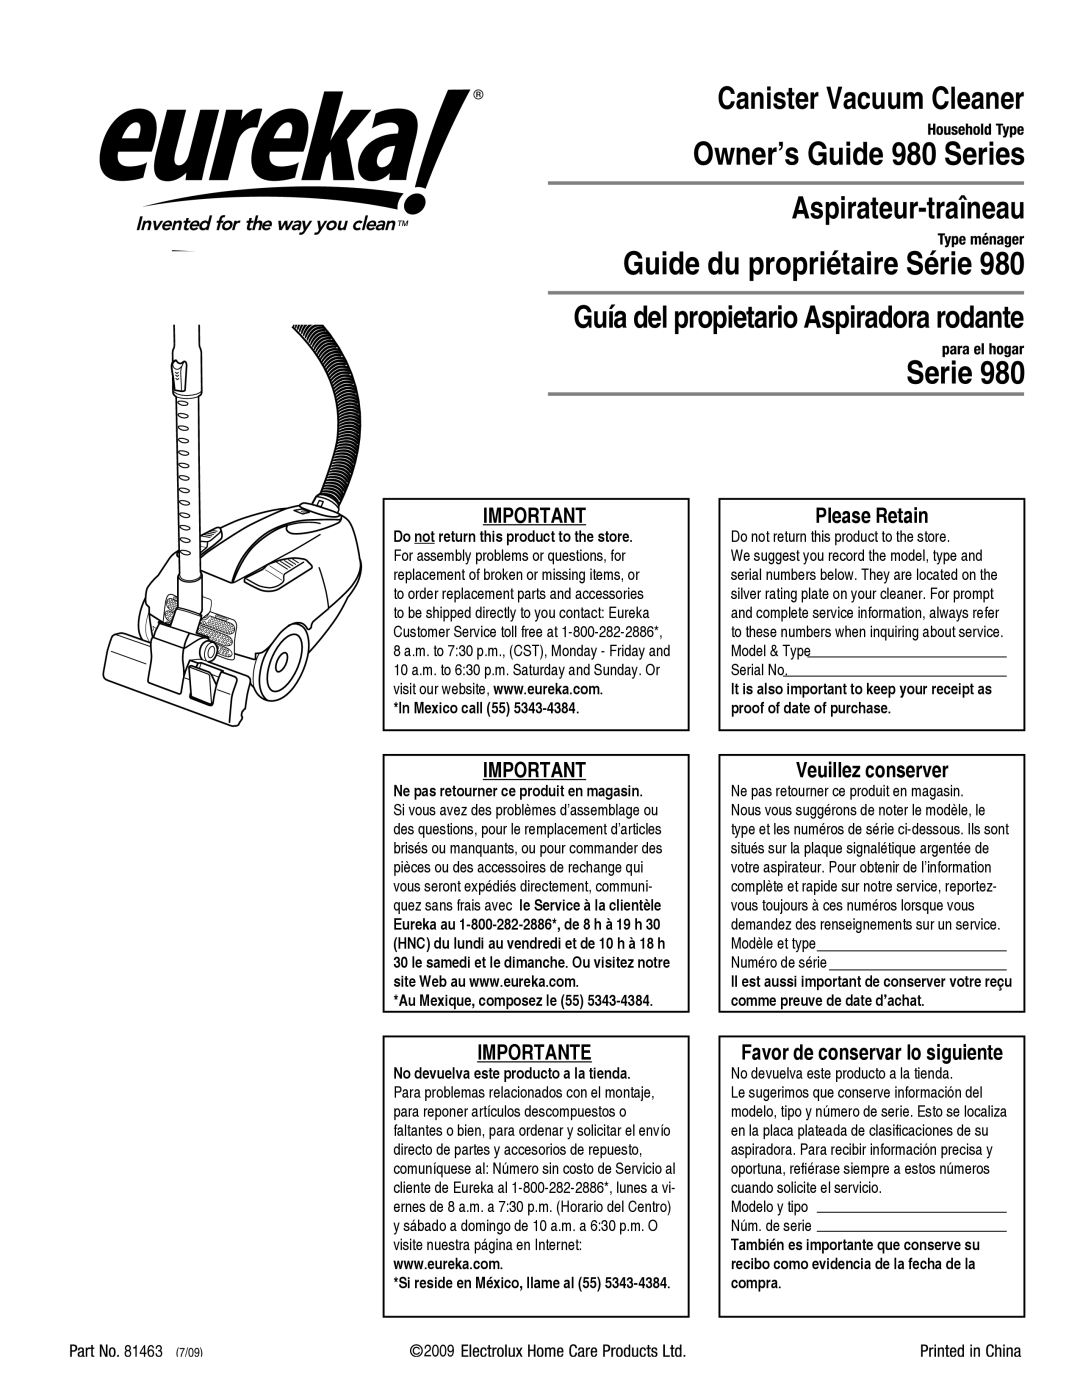 Eureka! Tents manual Guía del propietario Aspiradora rodante, Owner’s Guide 980 Series Aspirateur-traîneau, 7/09 